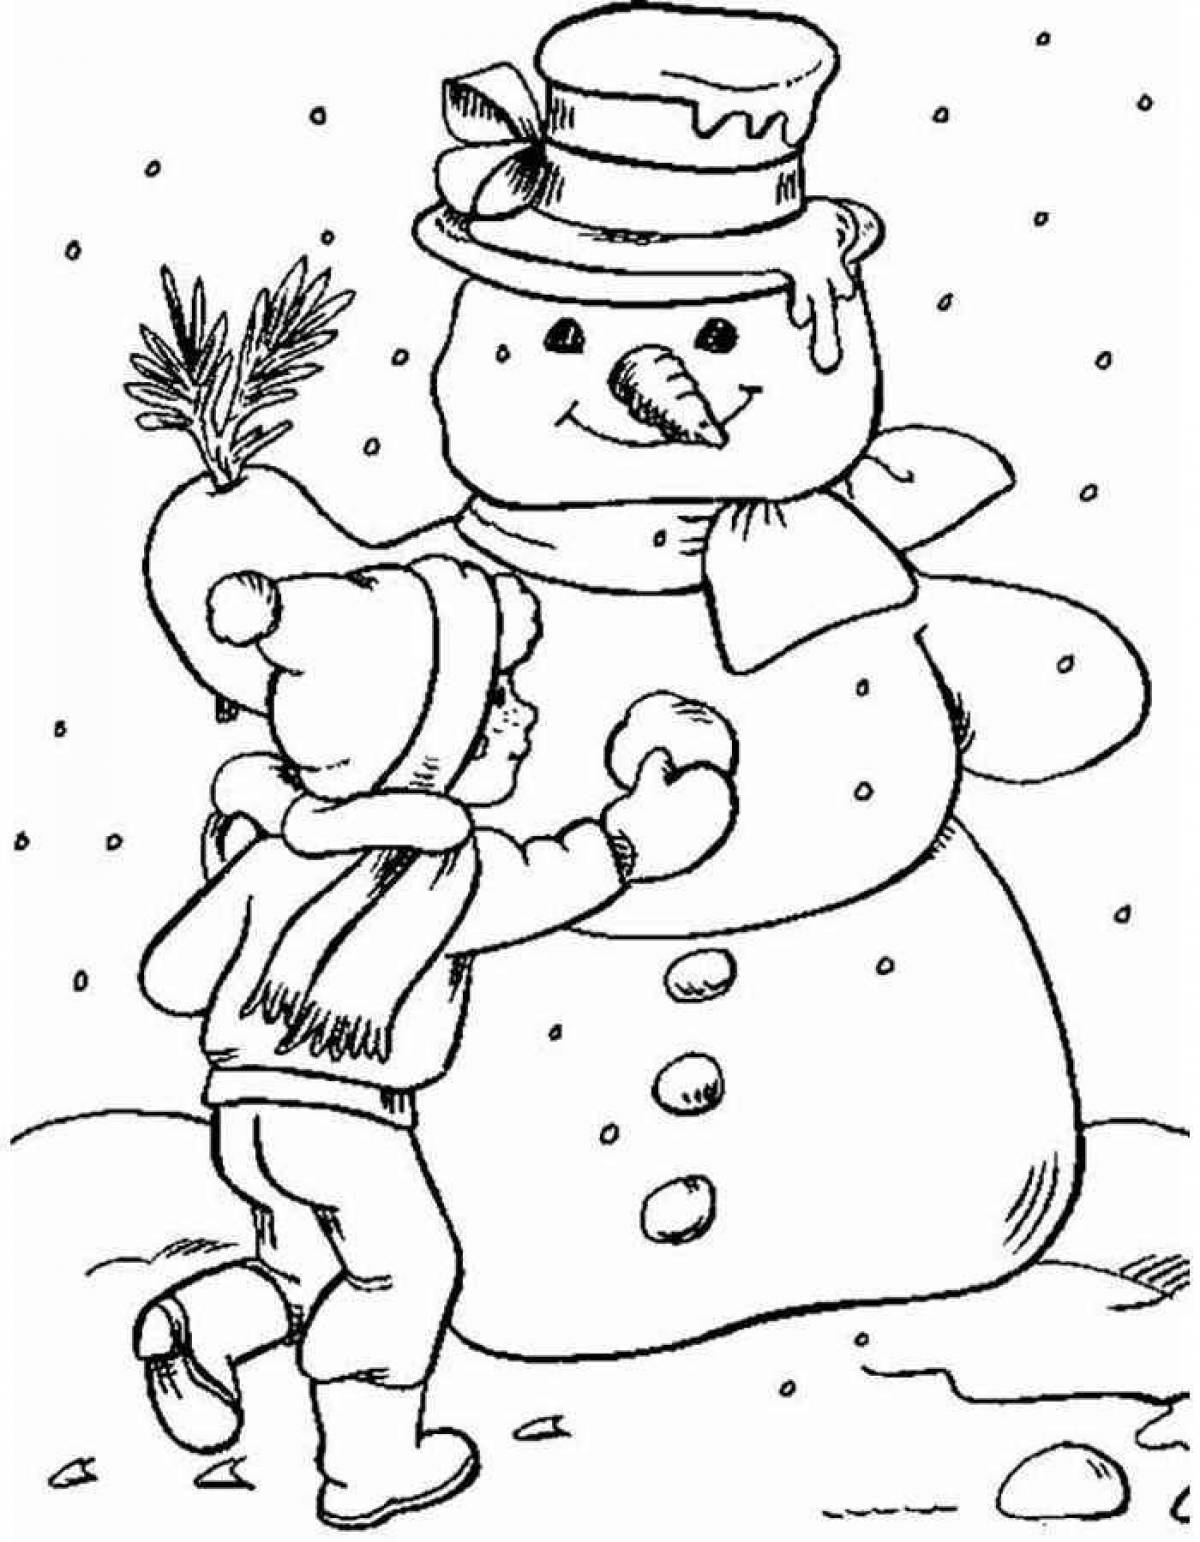 Sparkling snowman coloring book